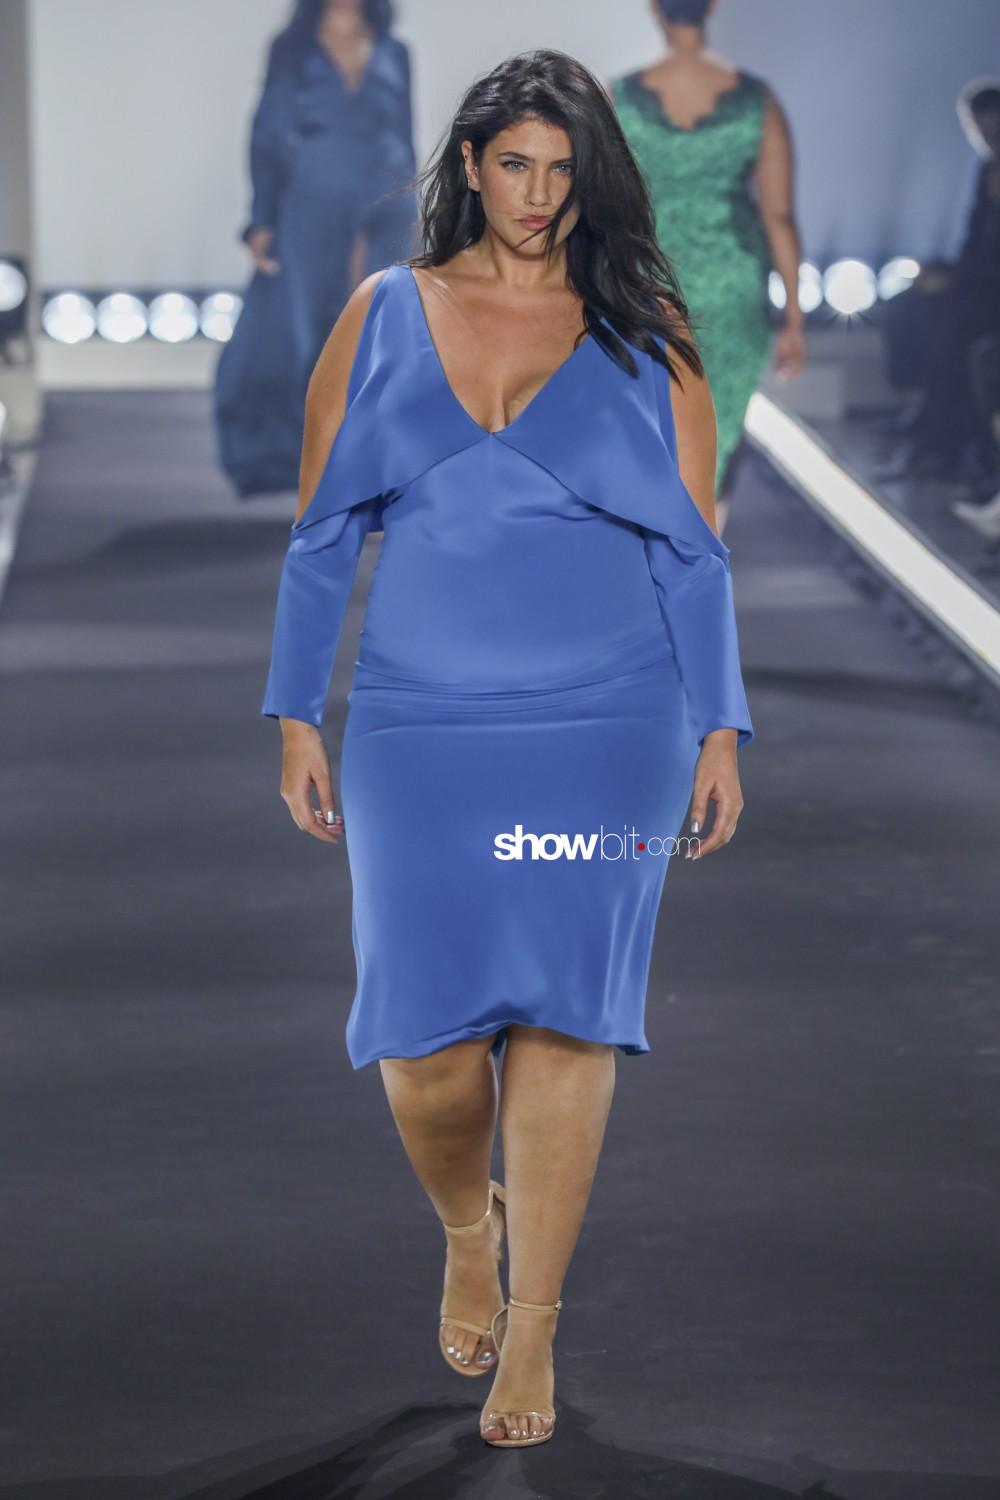 Curvy Fashion: an Over-look on Fall 2019 runways - ShowBit